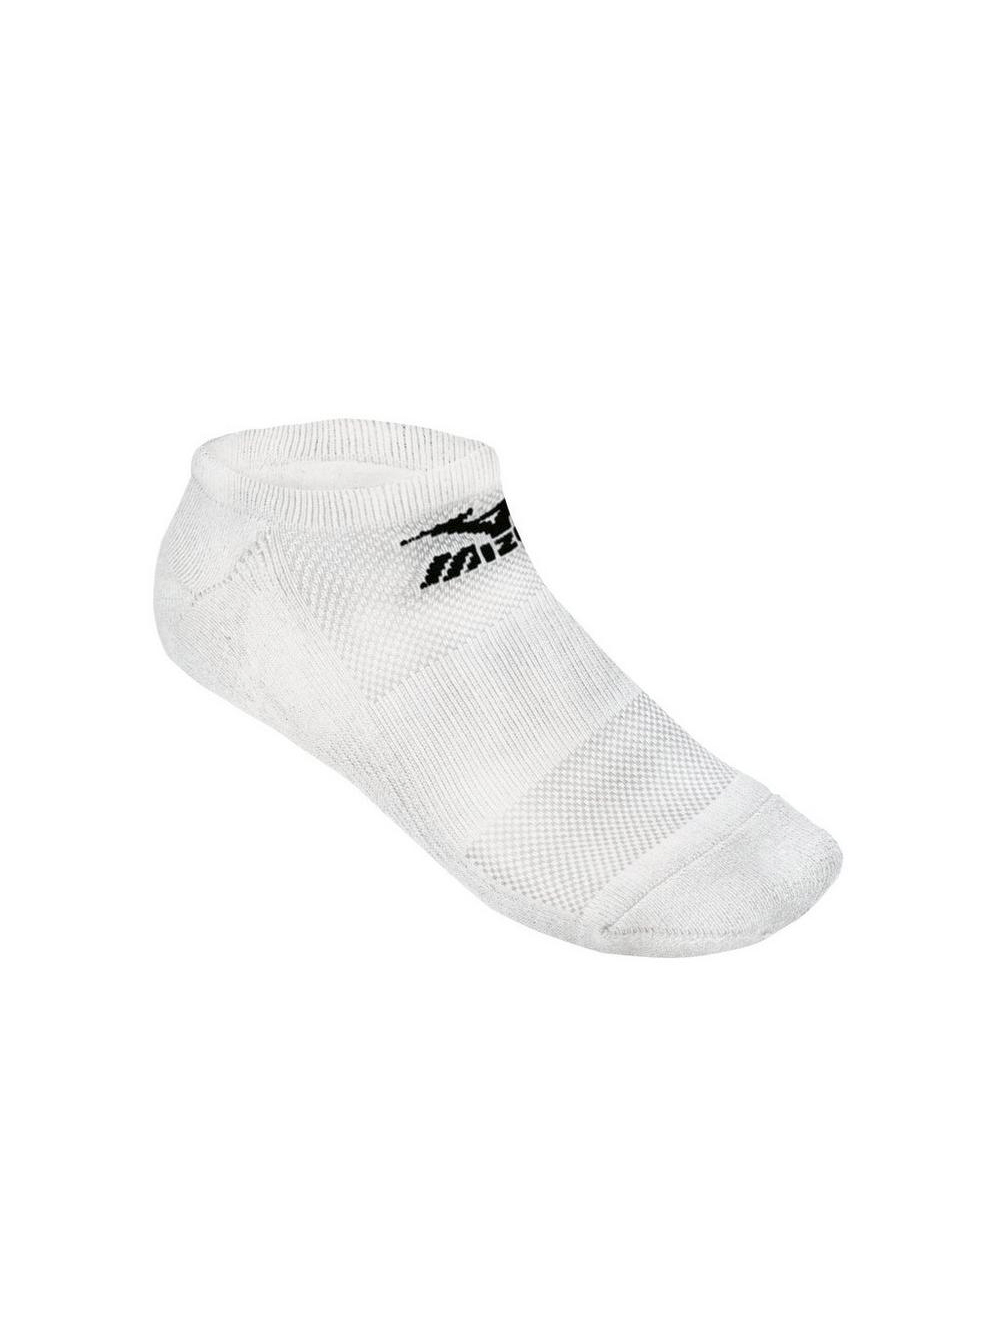 white mizuno socks